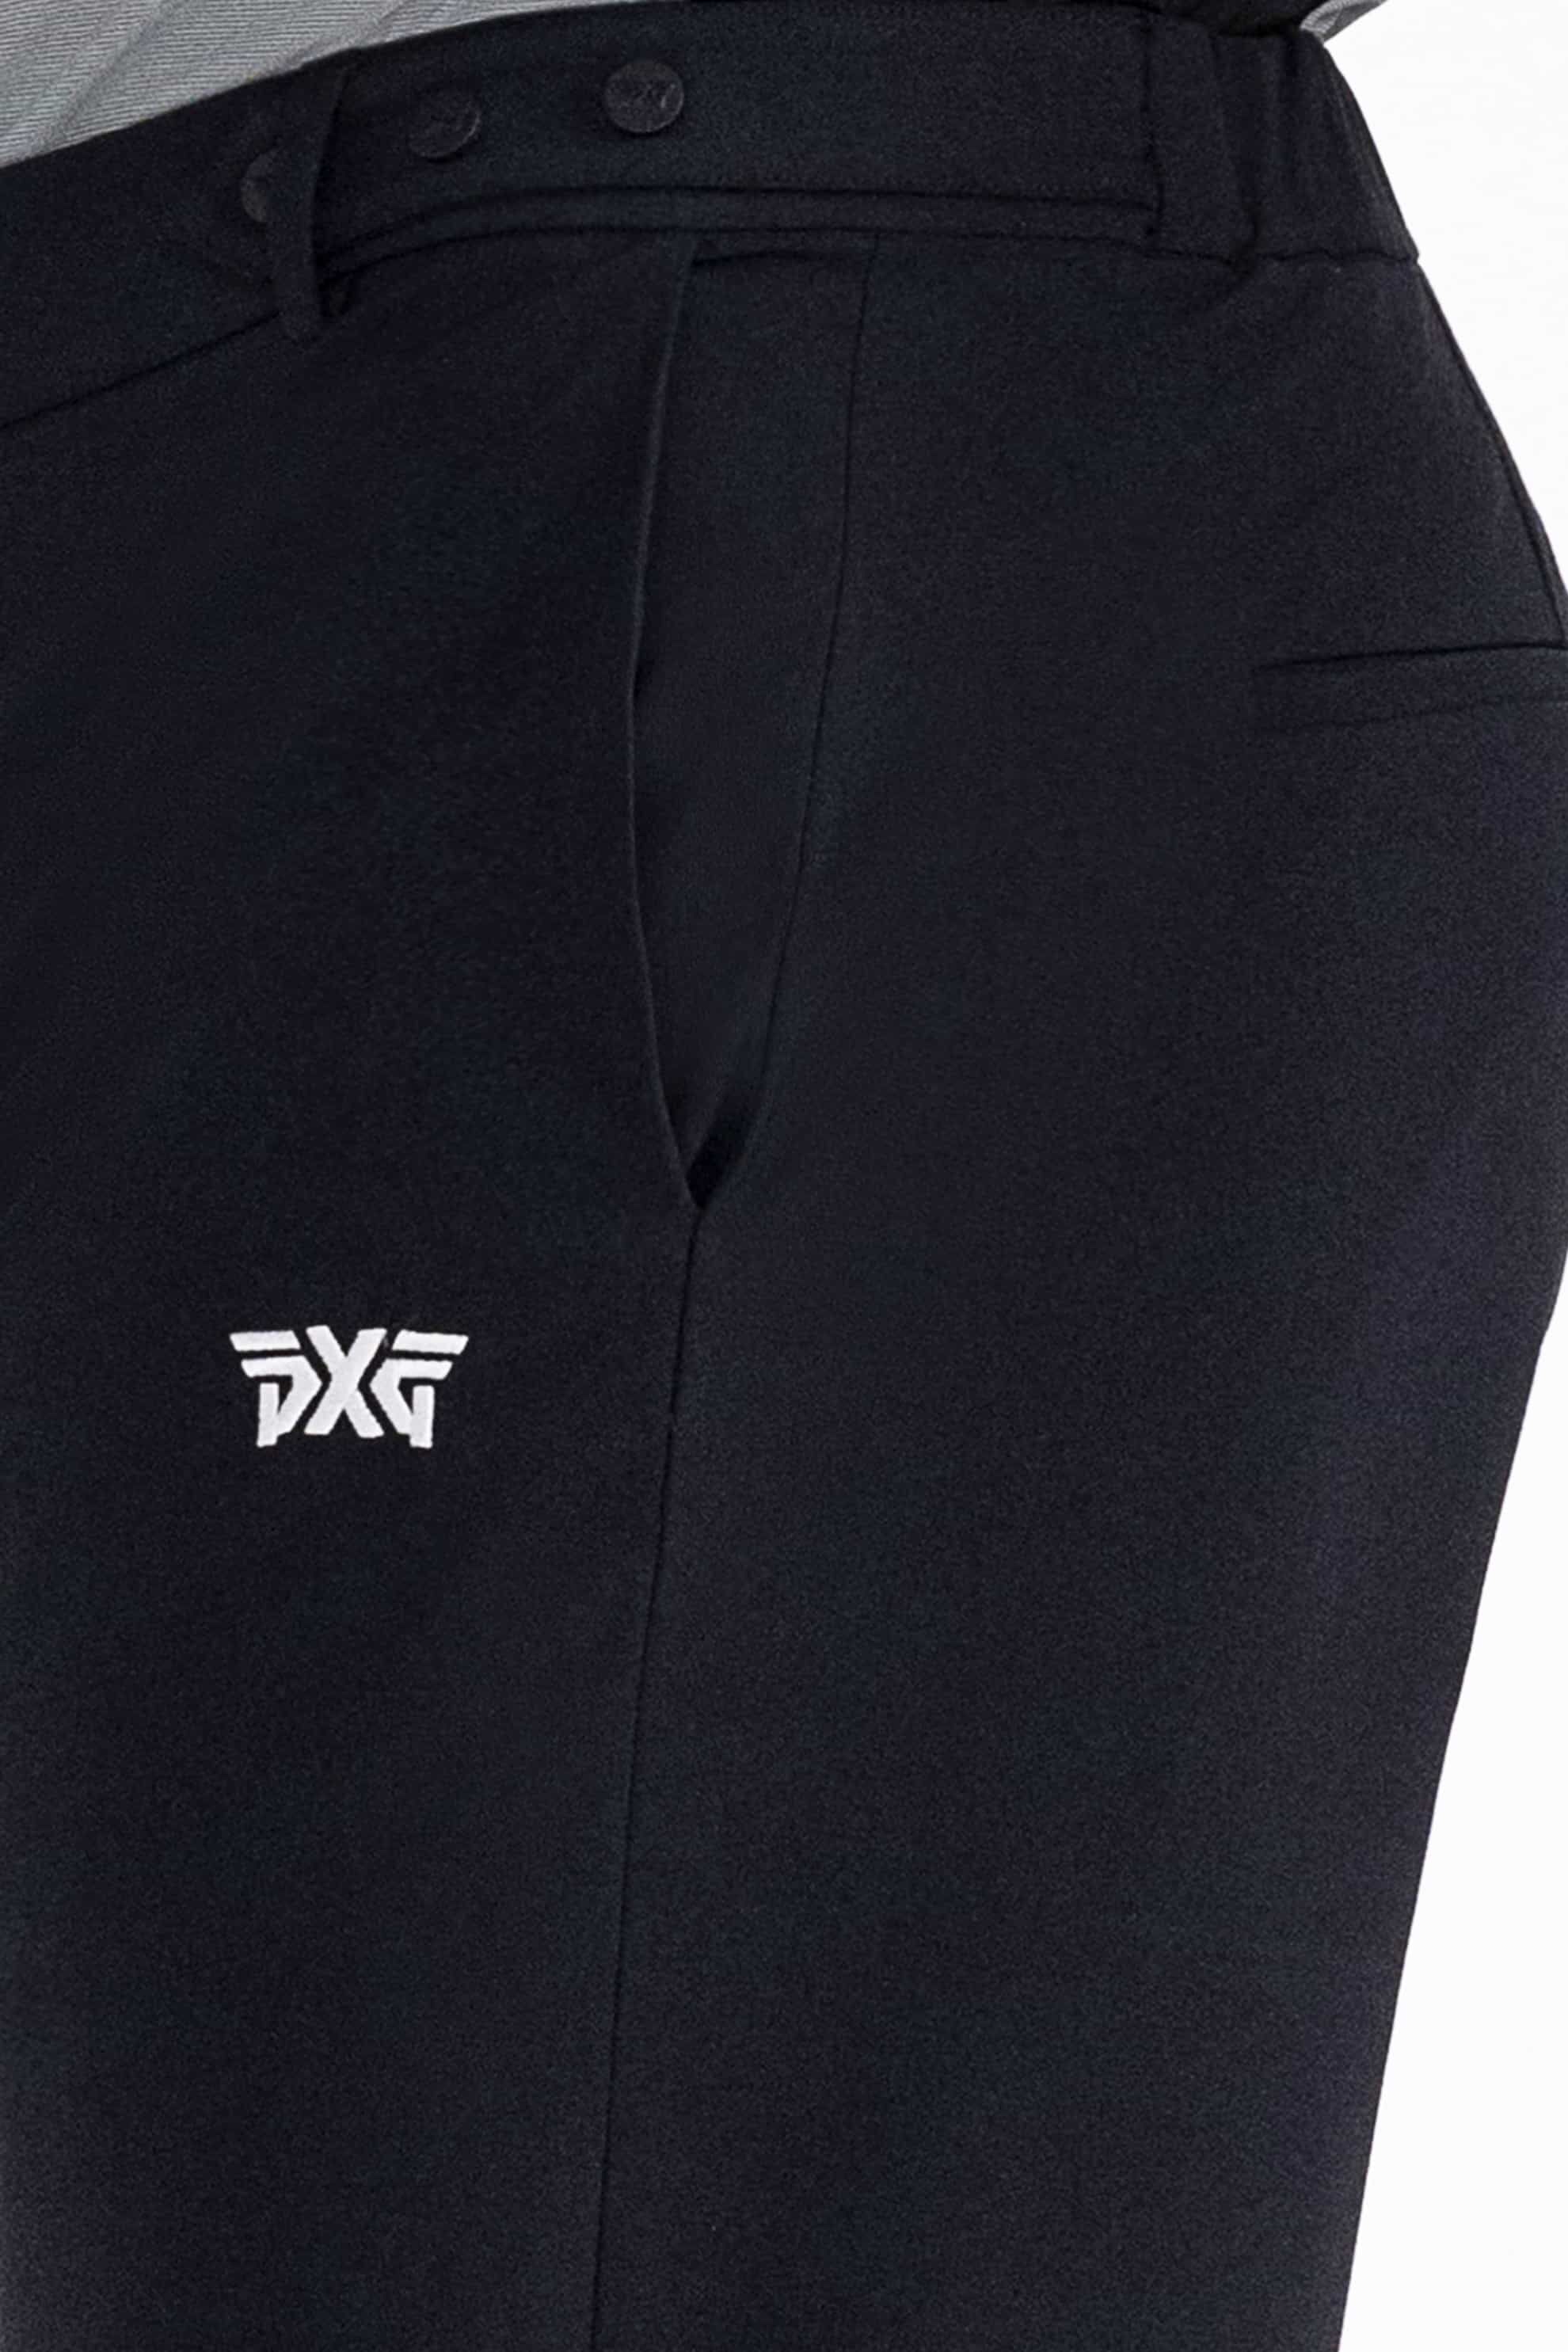 Classic Golfer Pants | Men's Golf Pants and Shorts | PXG